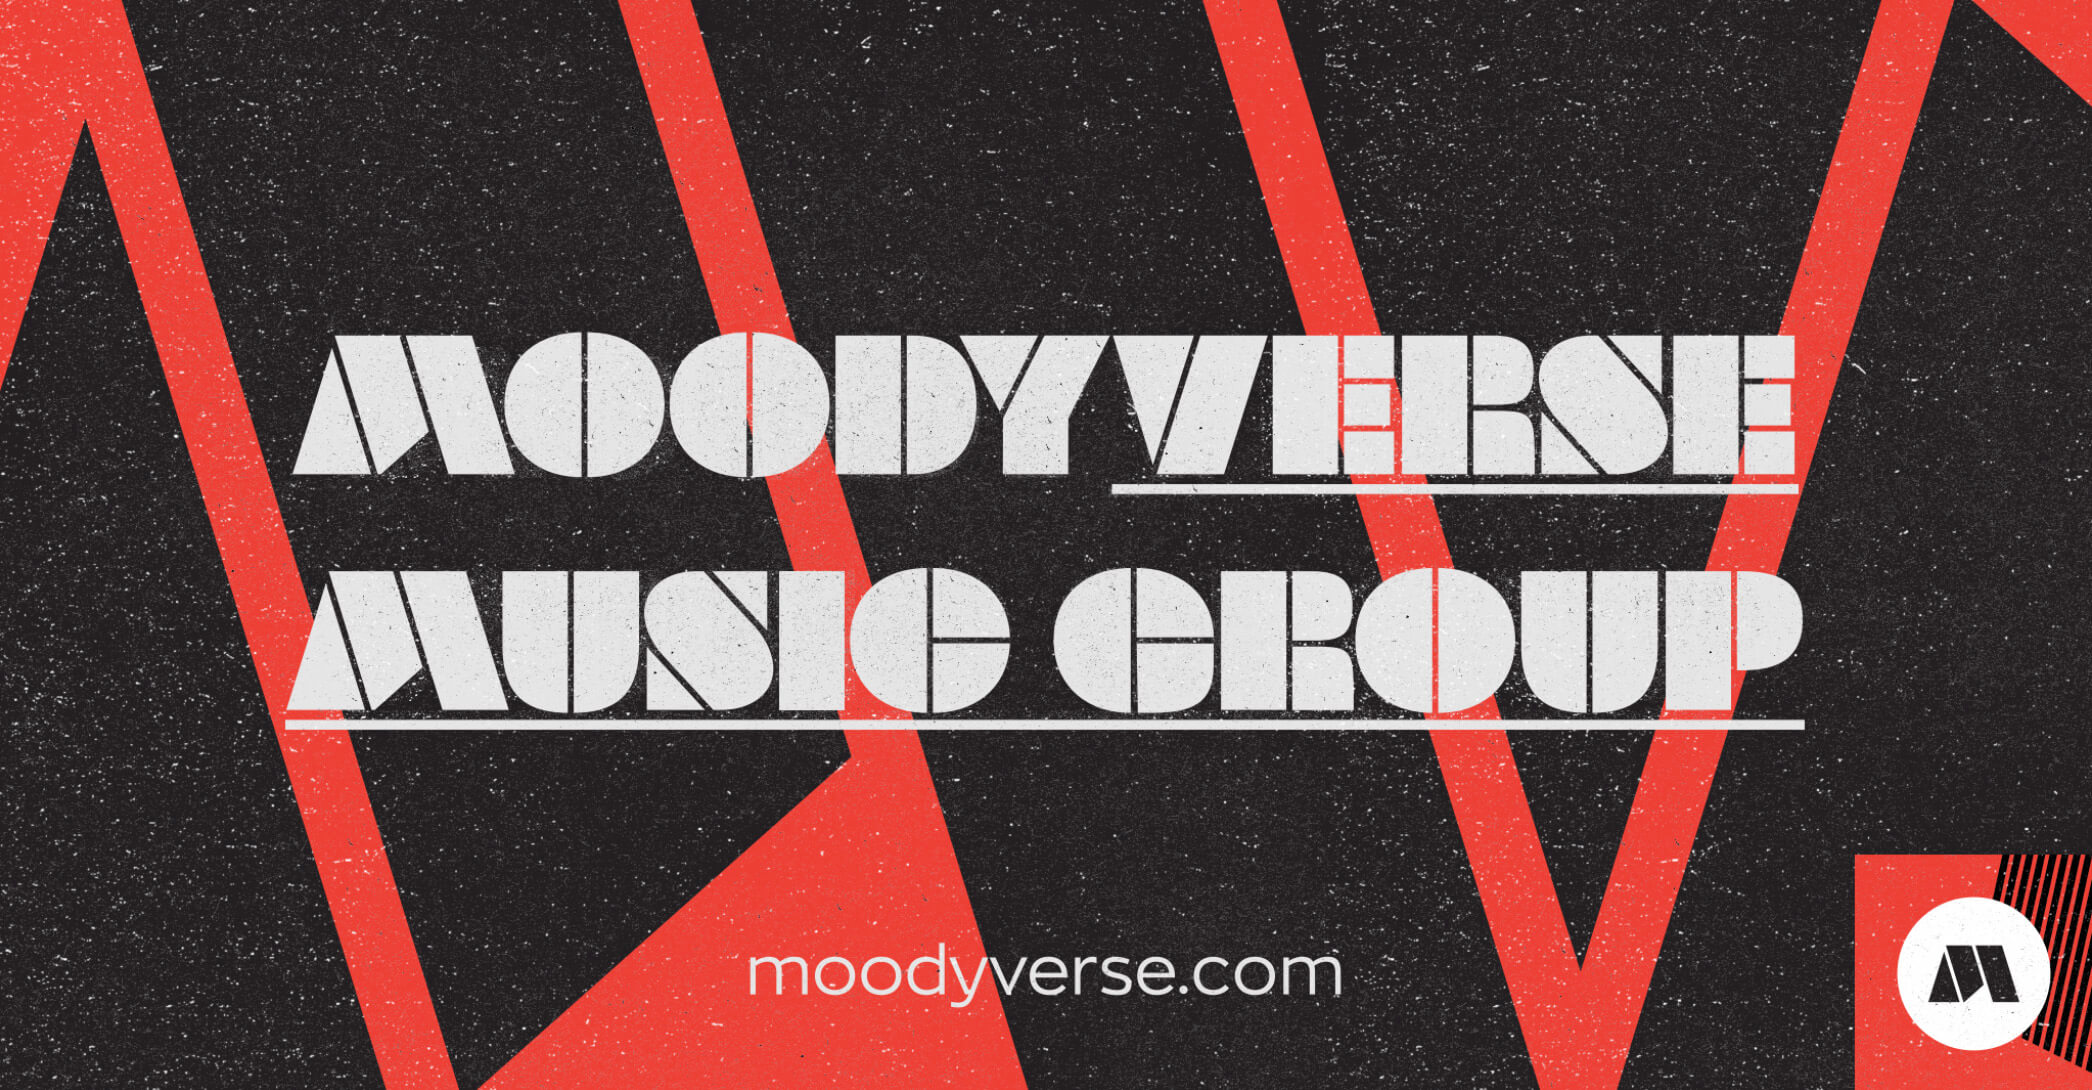 Moodyverse Music Group